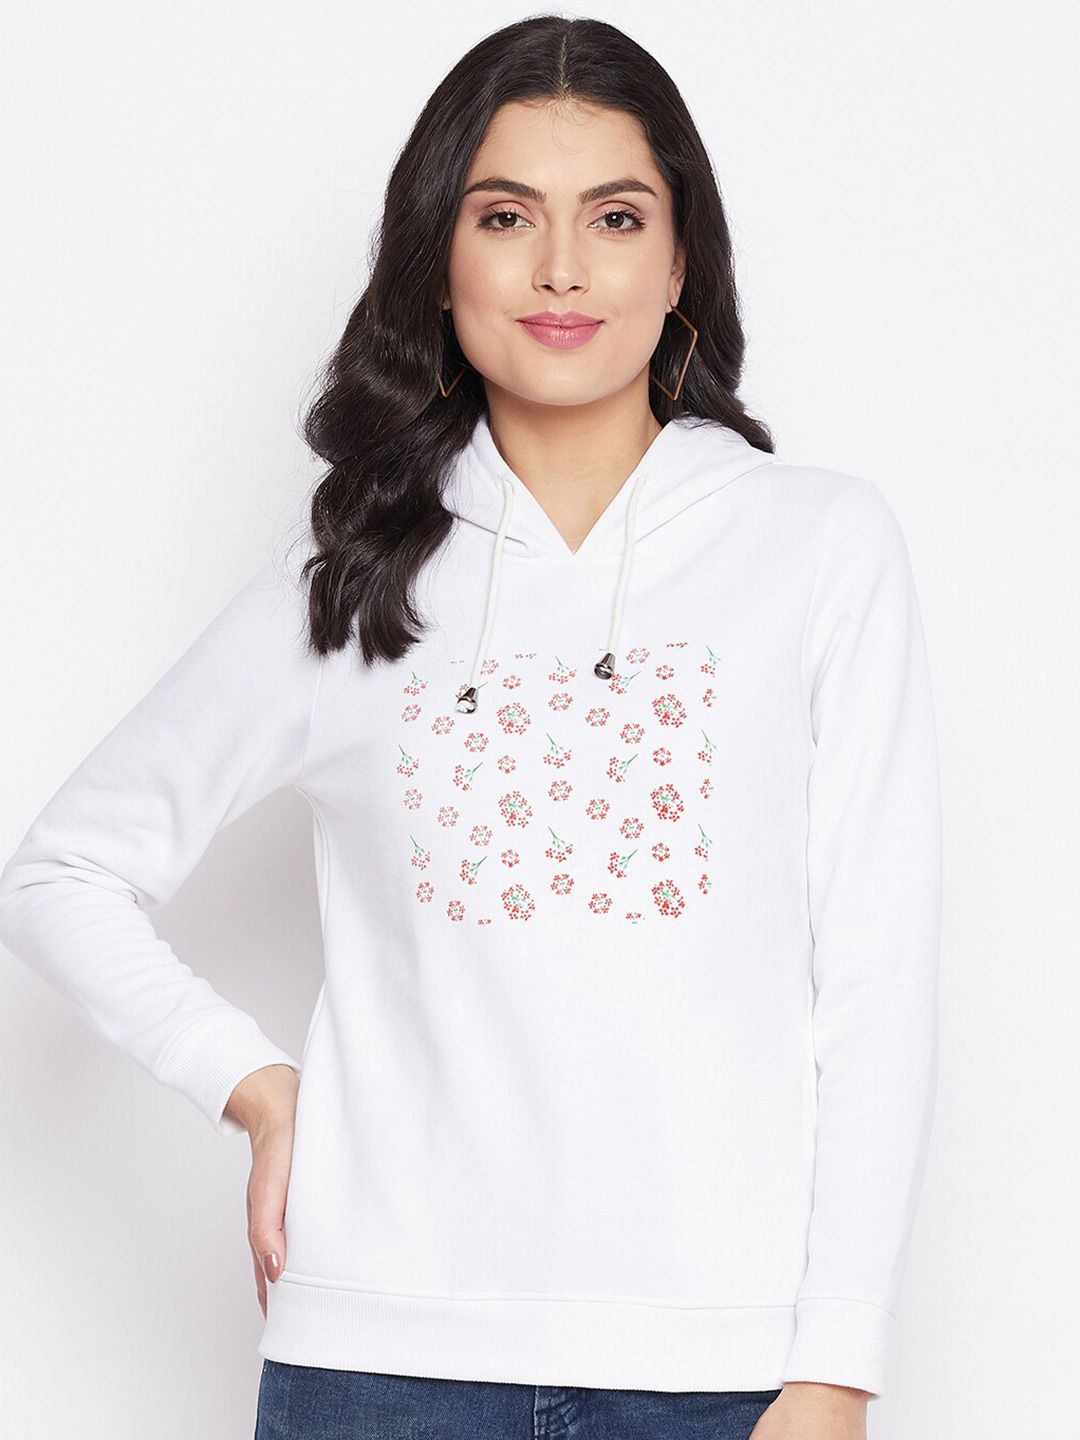 HARBORNBAY Women White Printed Hooded Sweatshirt Price in India